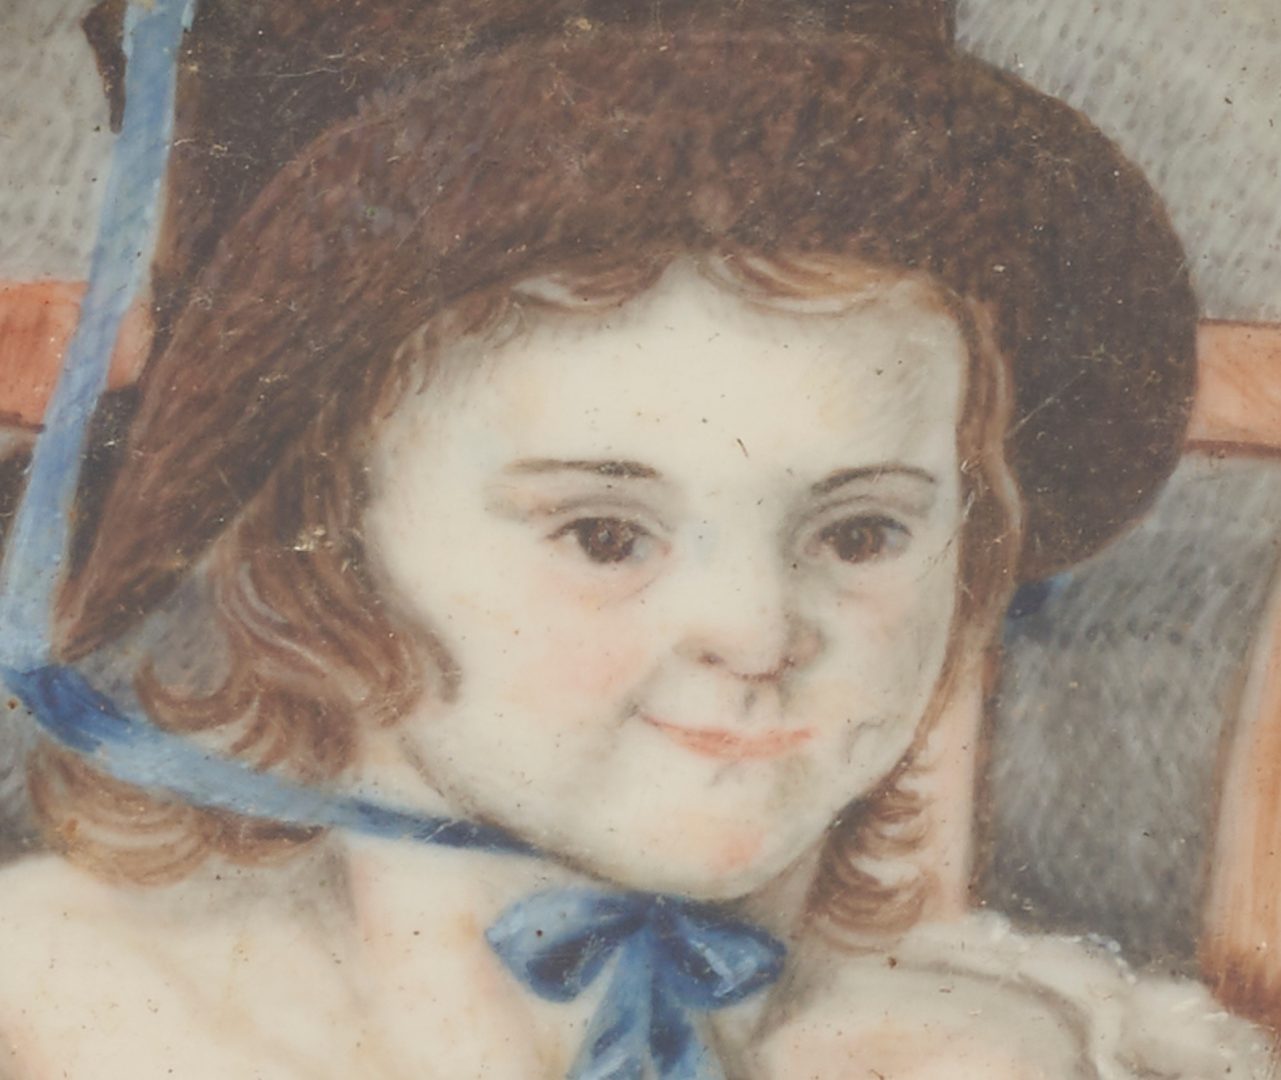 Lot 229: Portrait Miniature of a Child, Harriet Eaton of NC